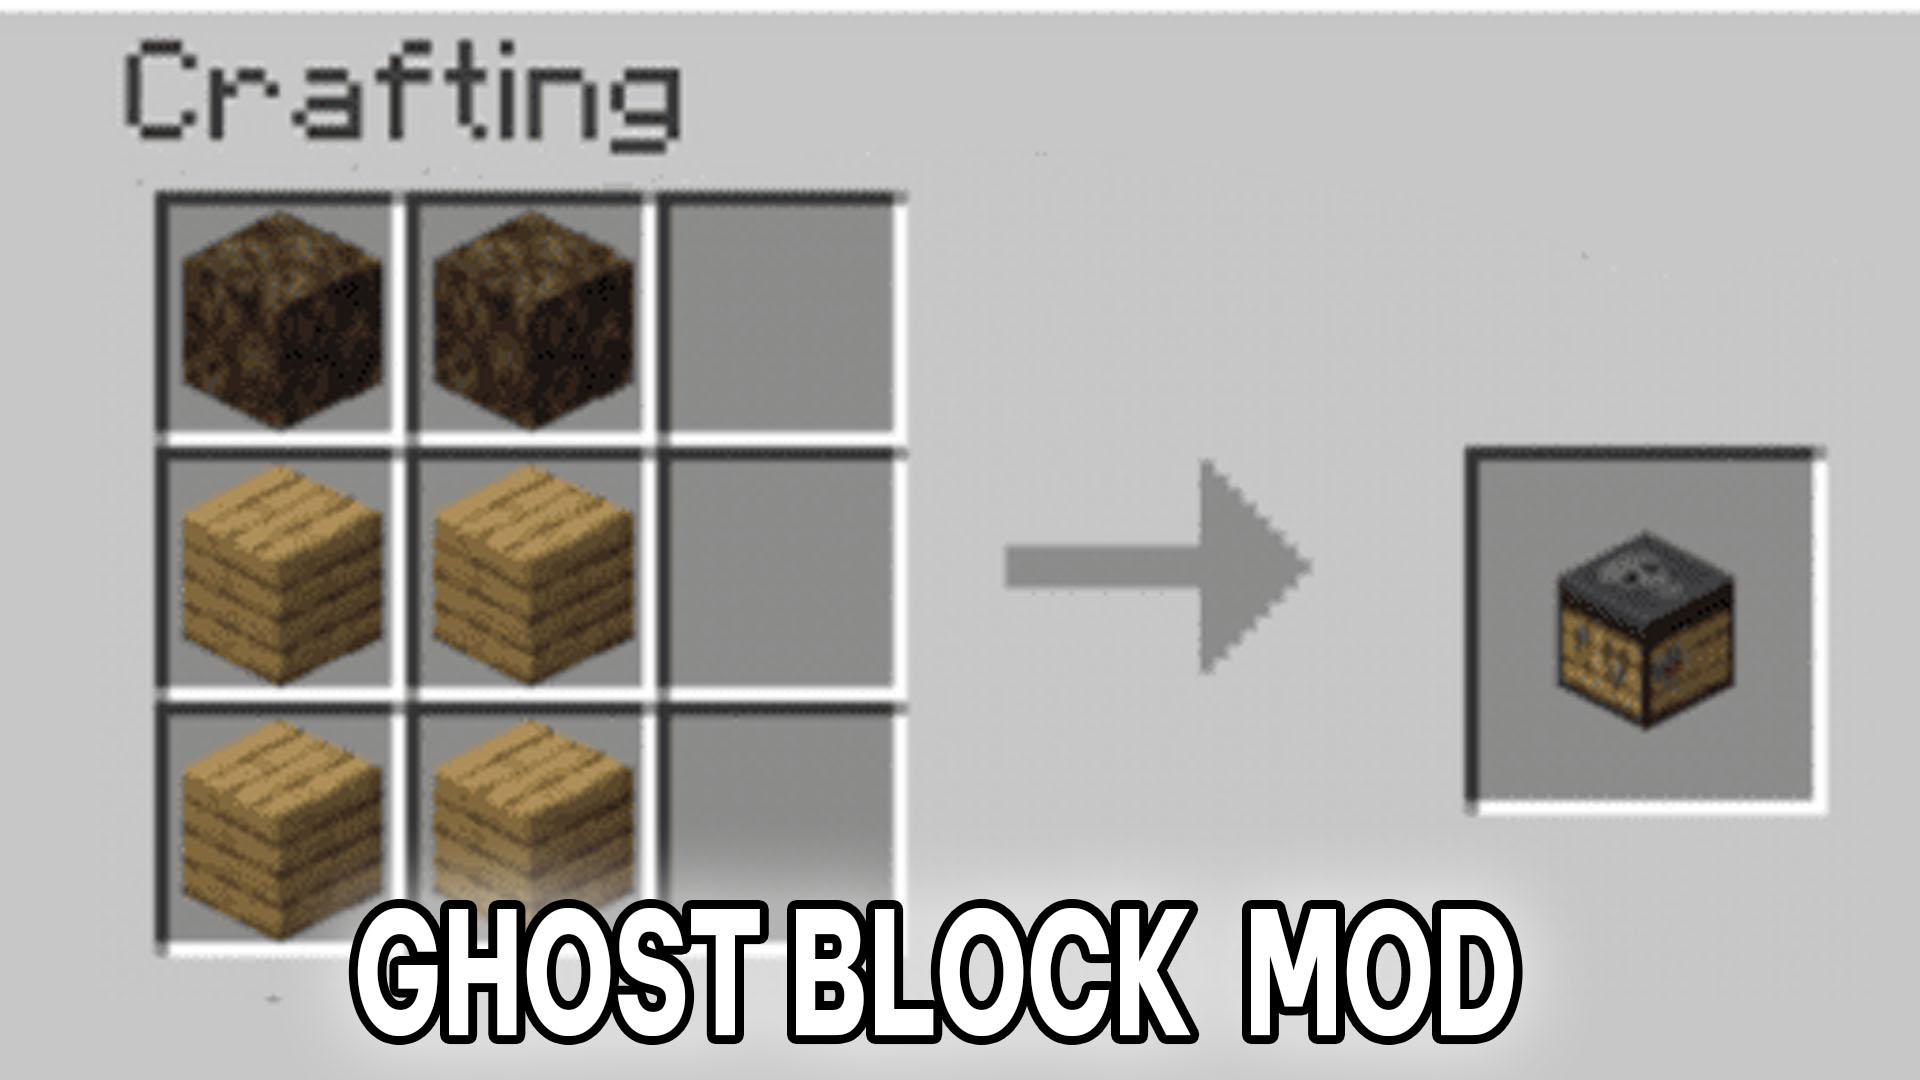 Ghost blocks